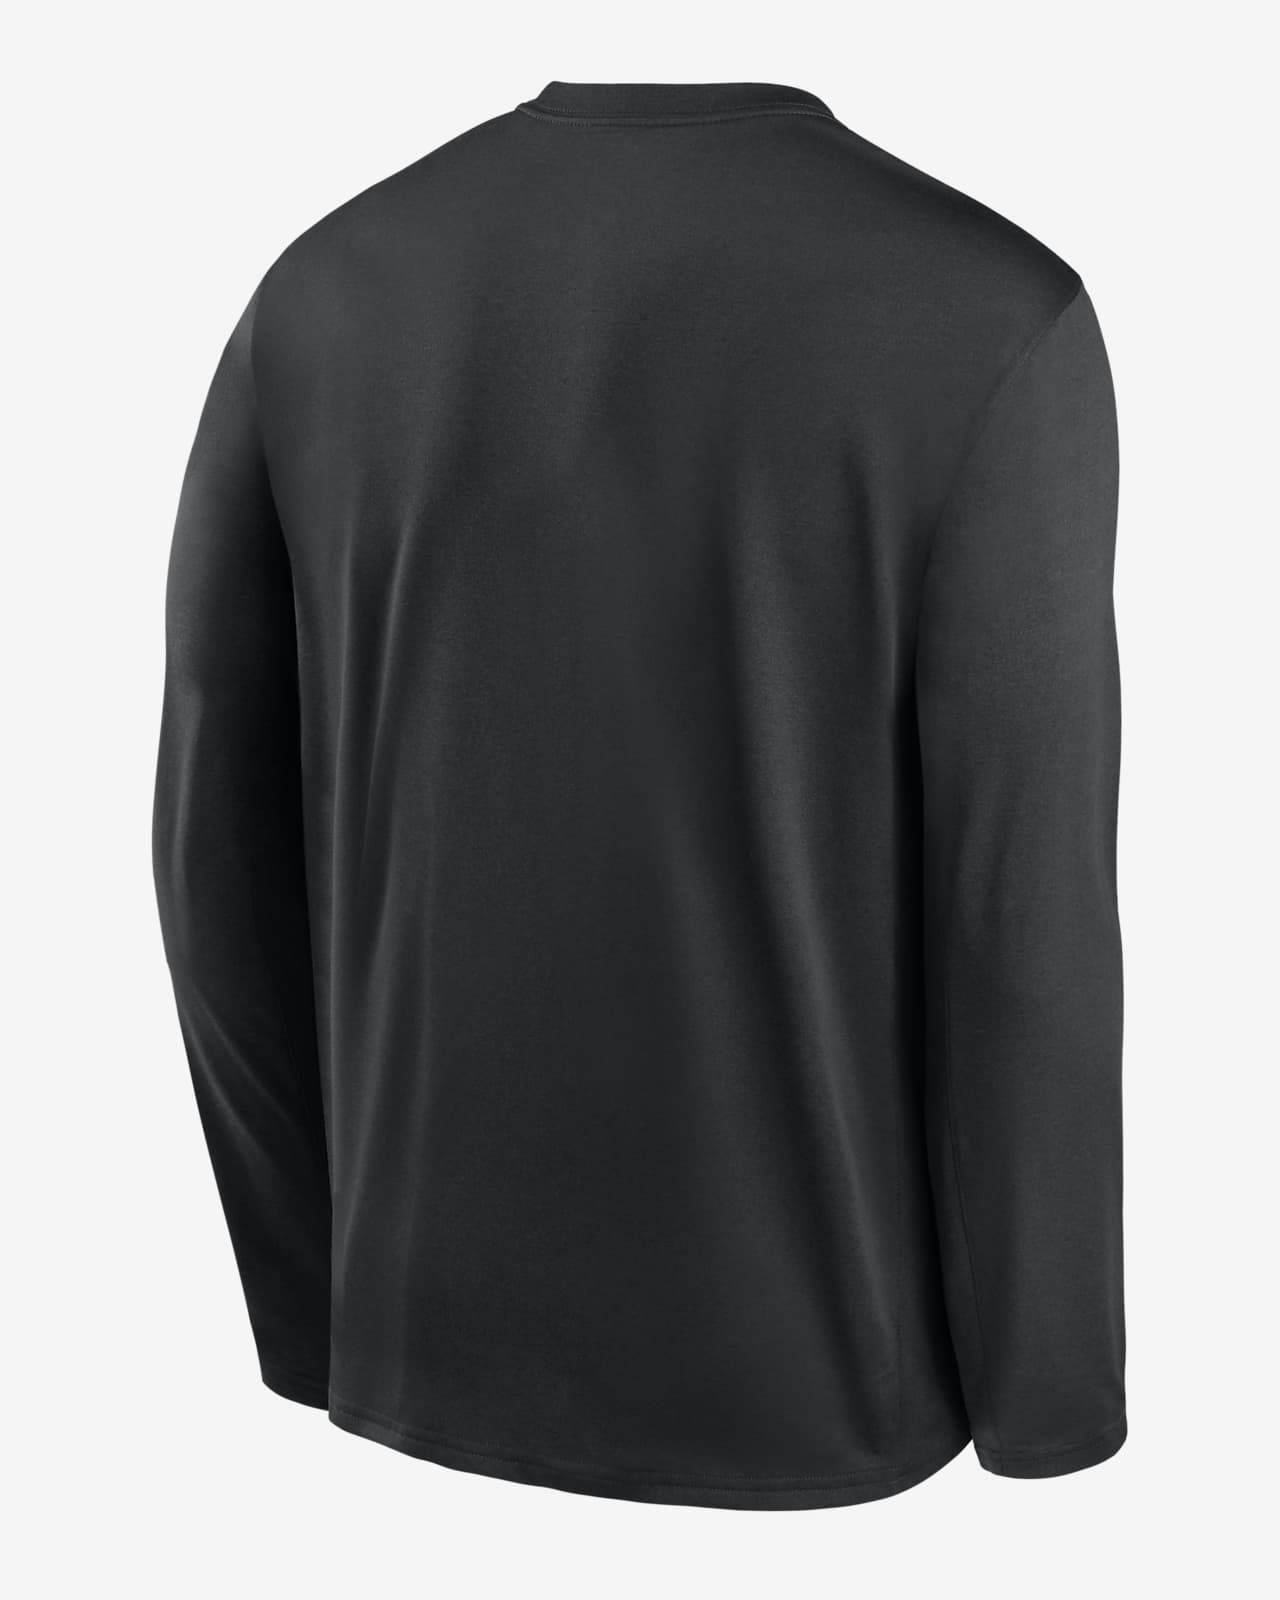 Nike Dri-FIT Team Legend (MLB Colorado Rockies) Men's Long-Sleeve T-Shirt.